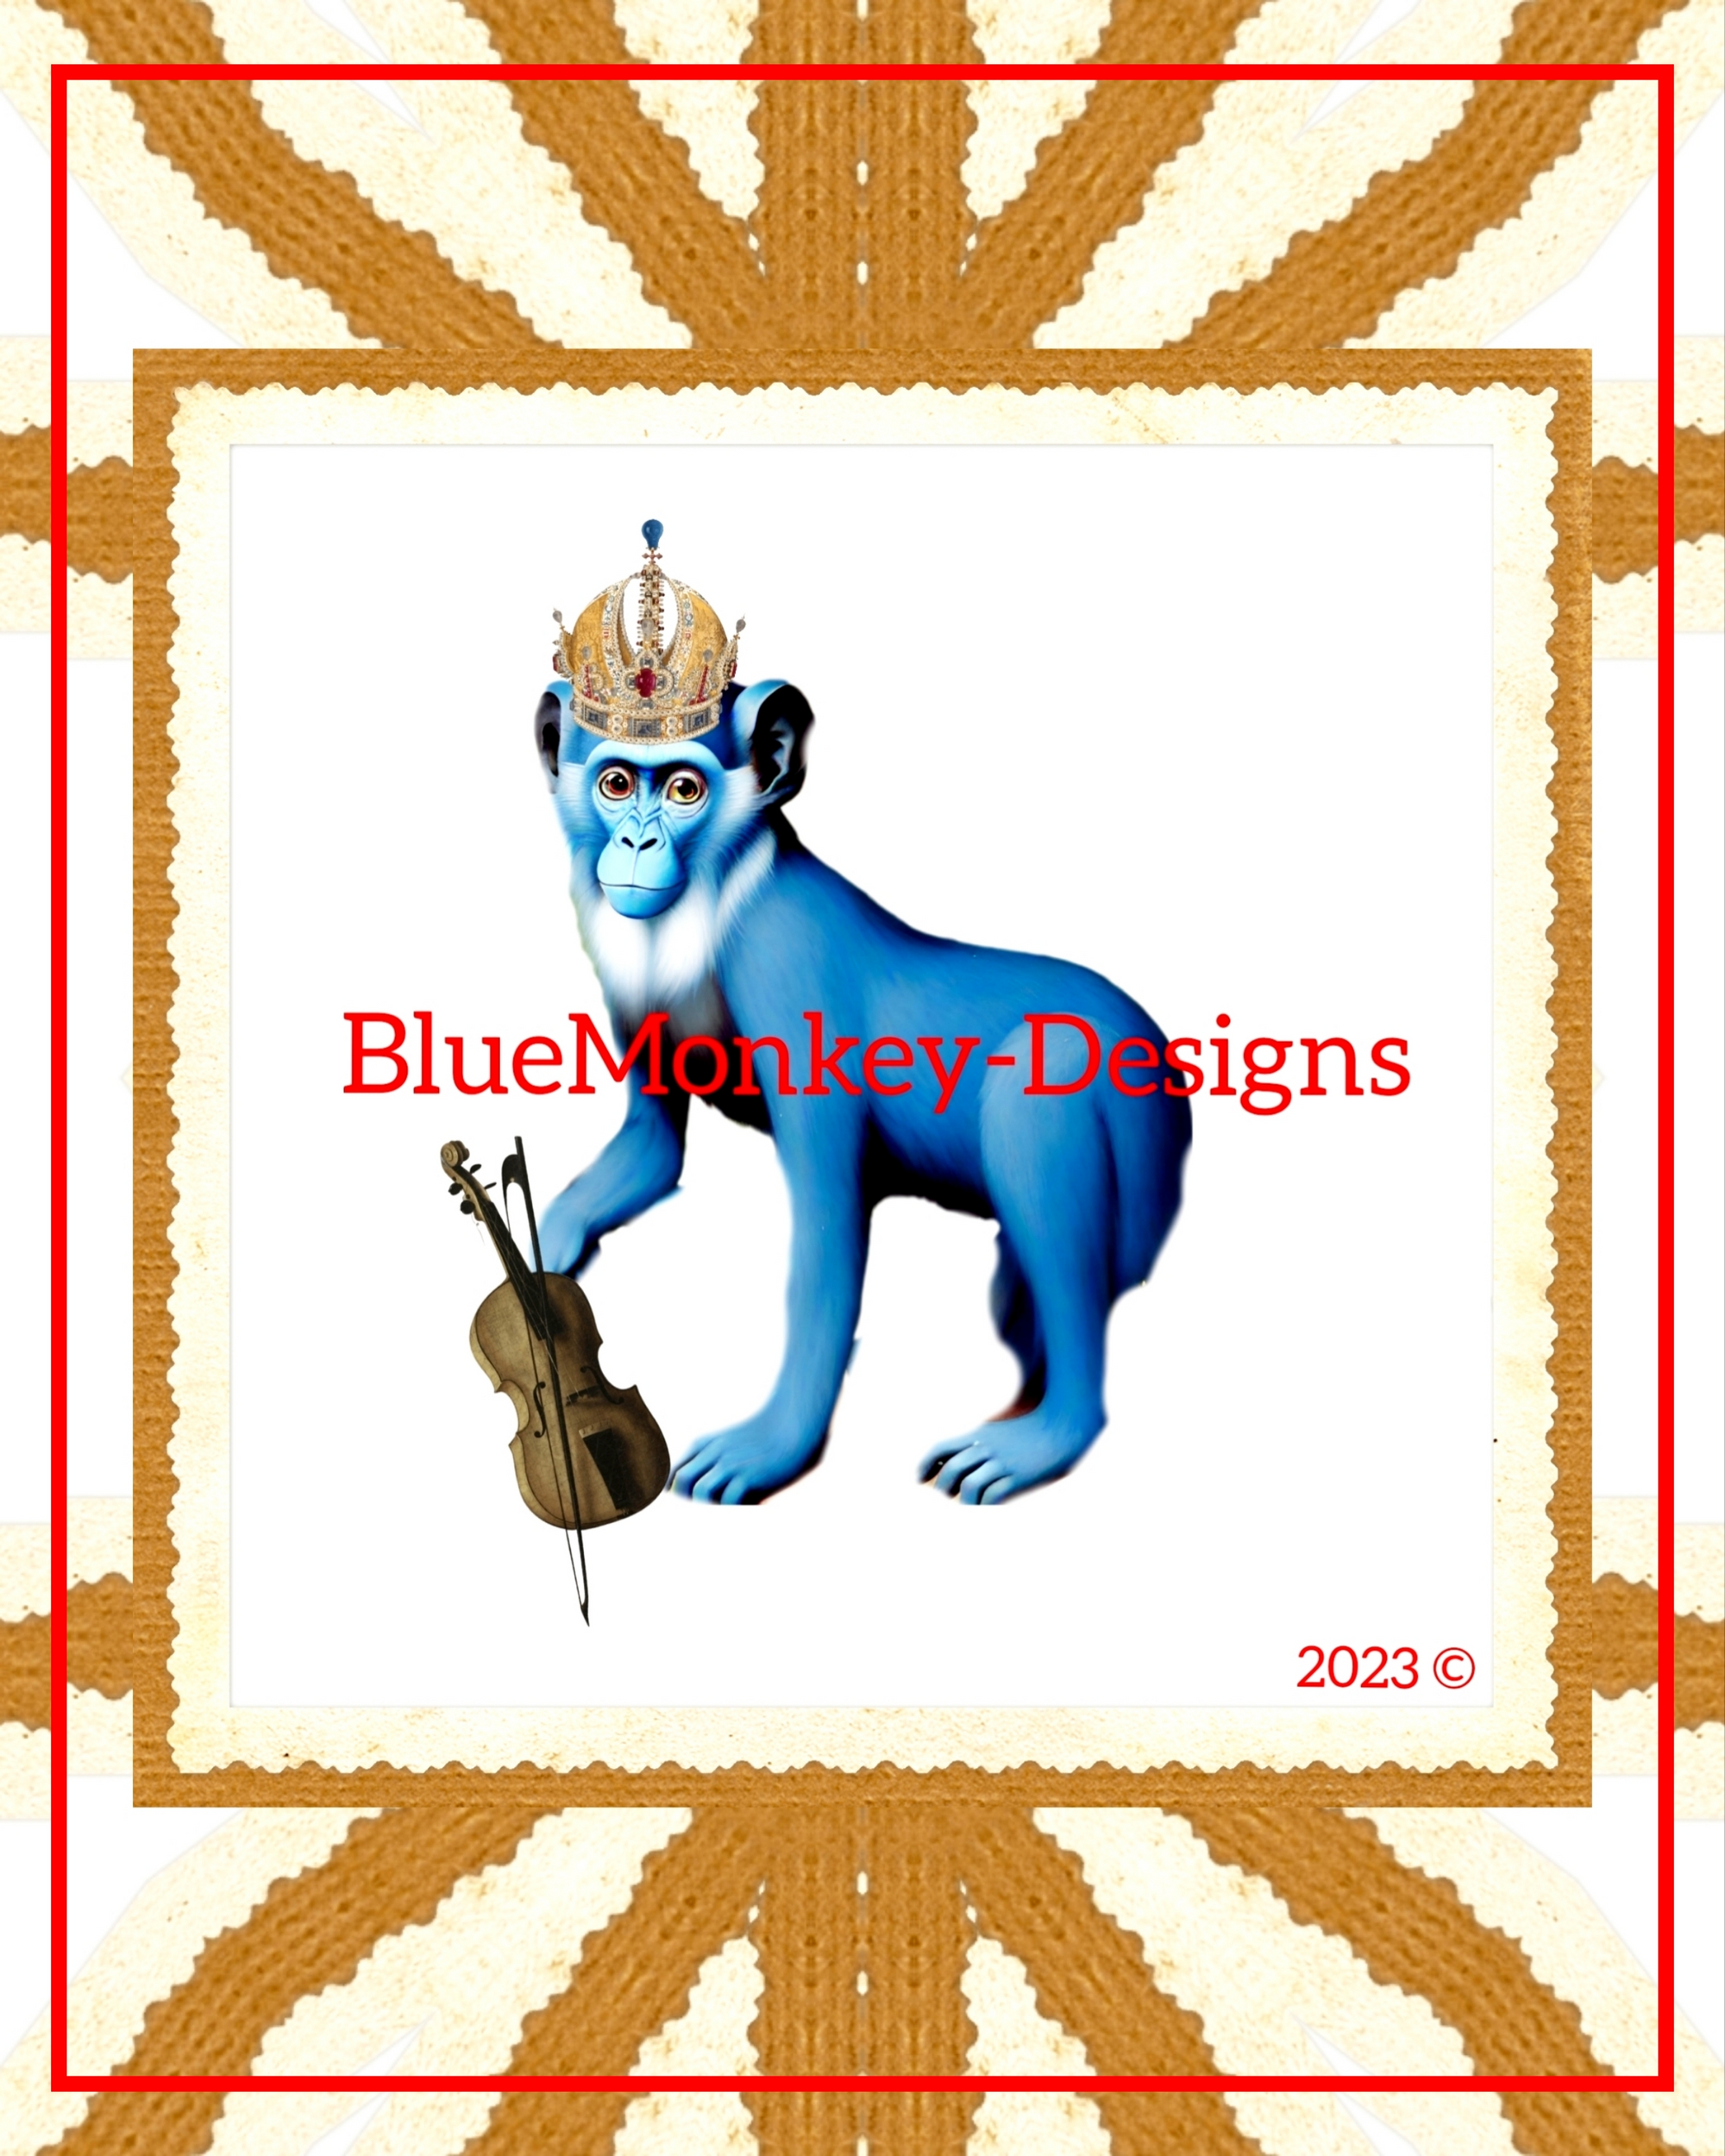 Designs by BlueMonkey-Designs